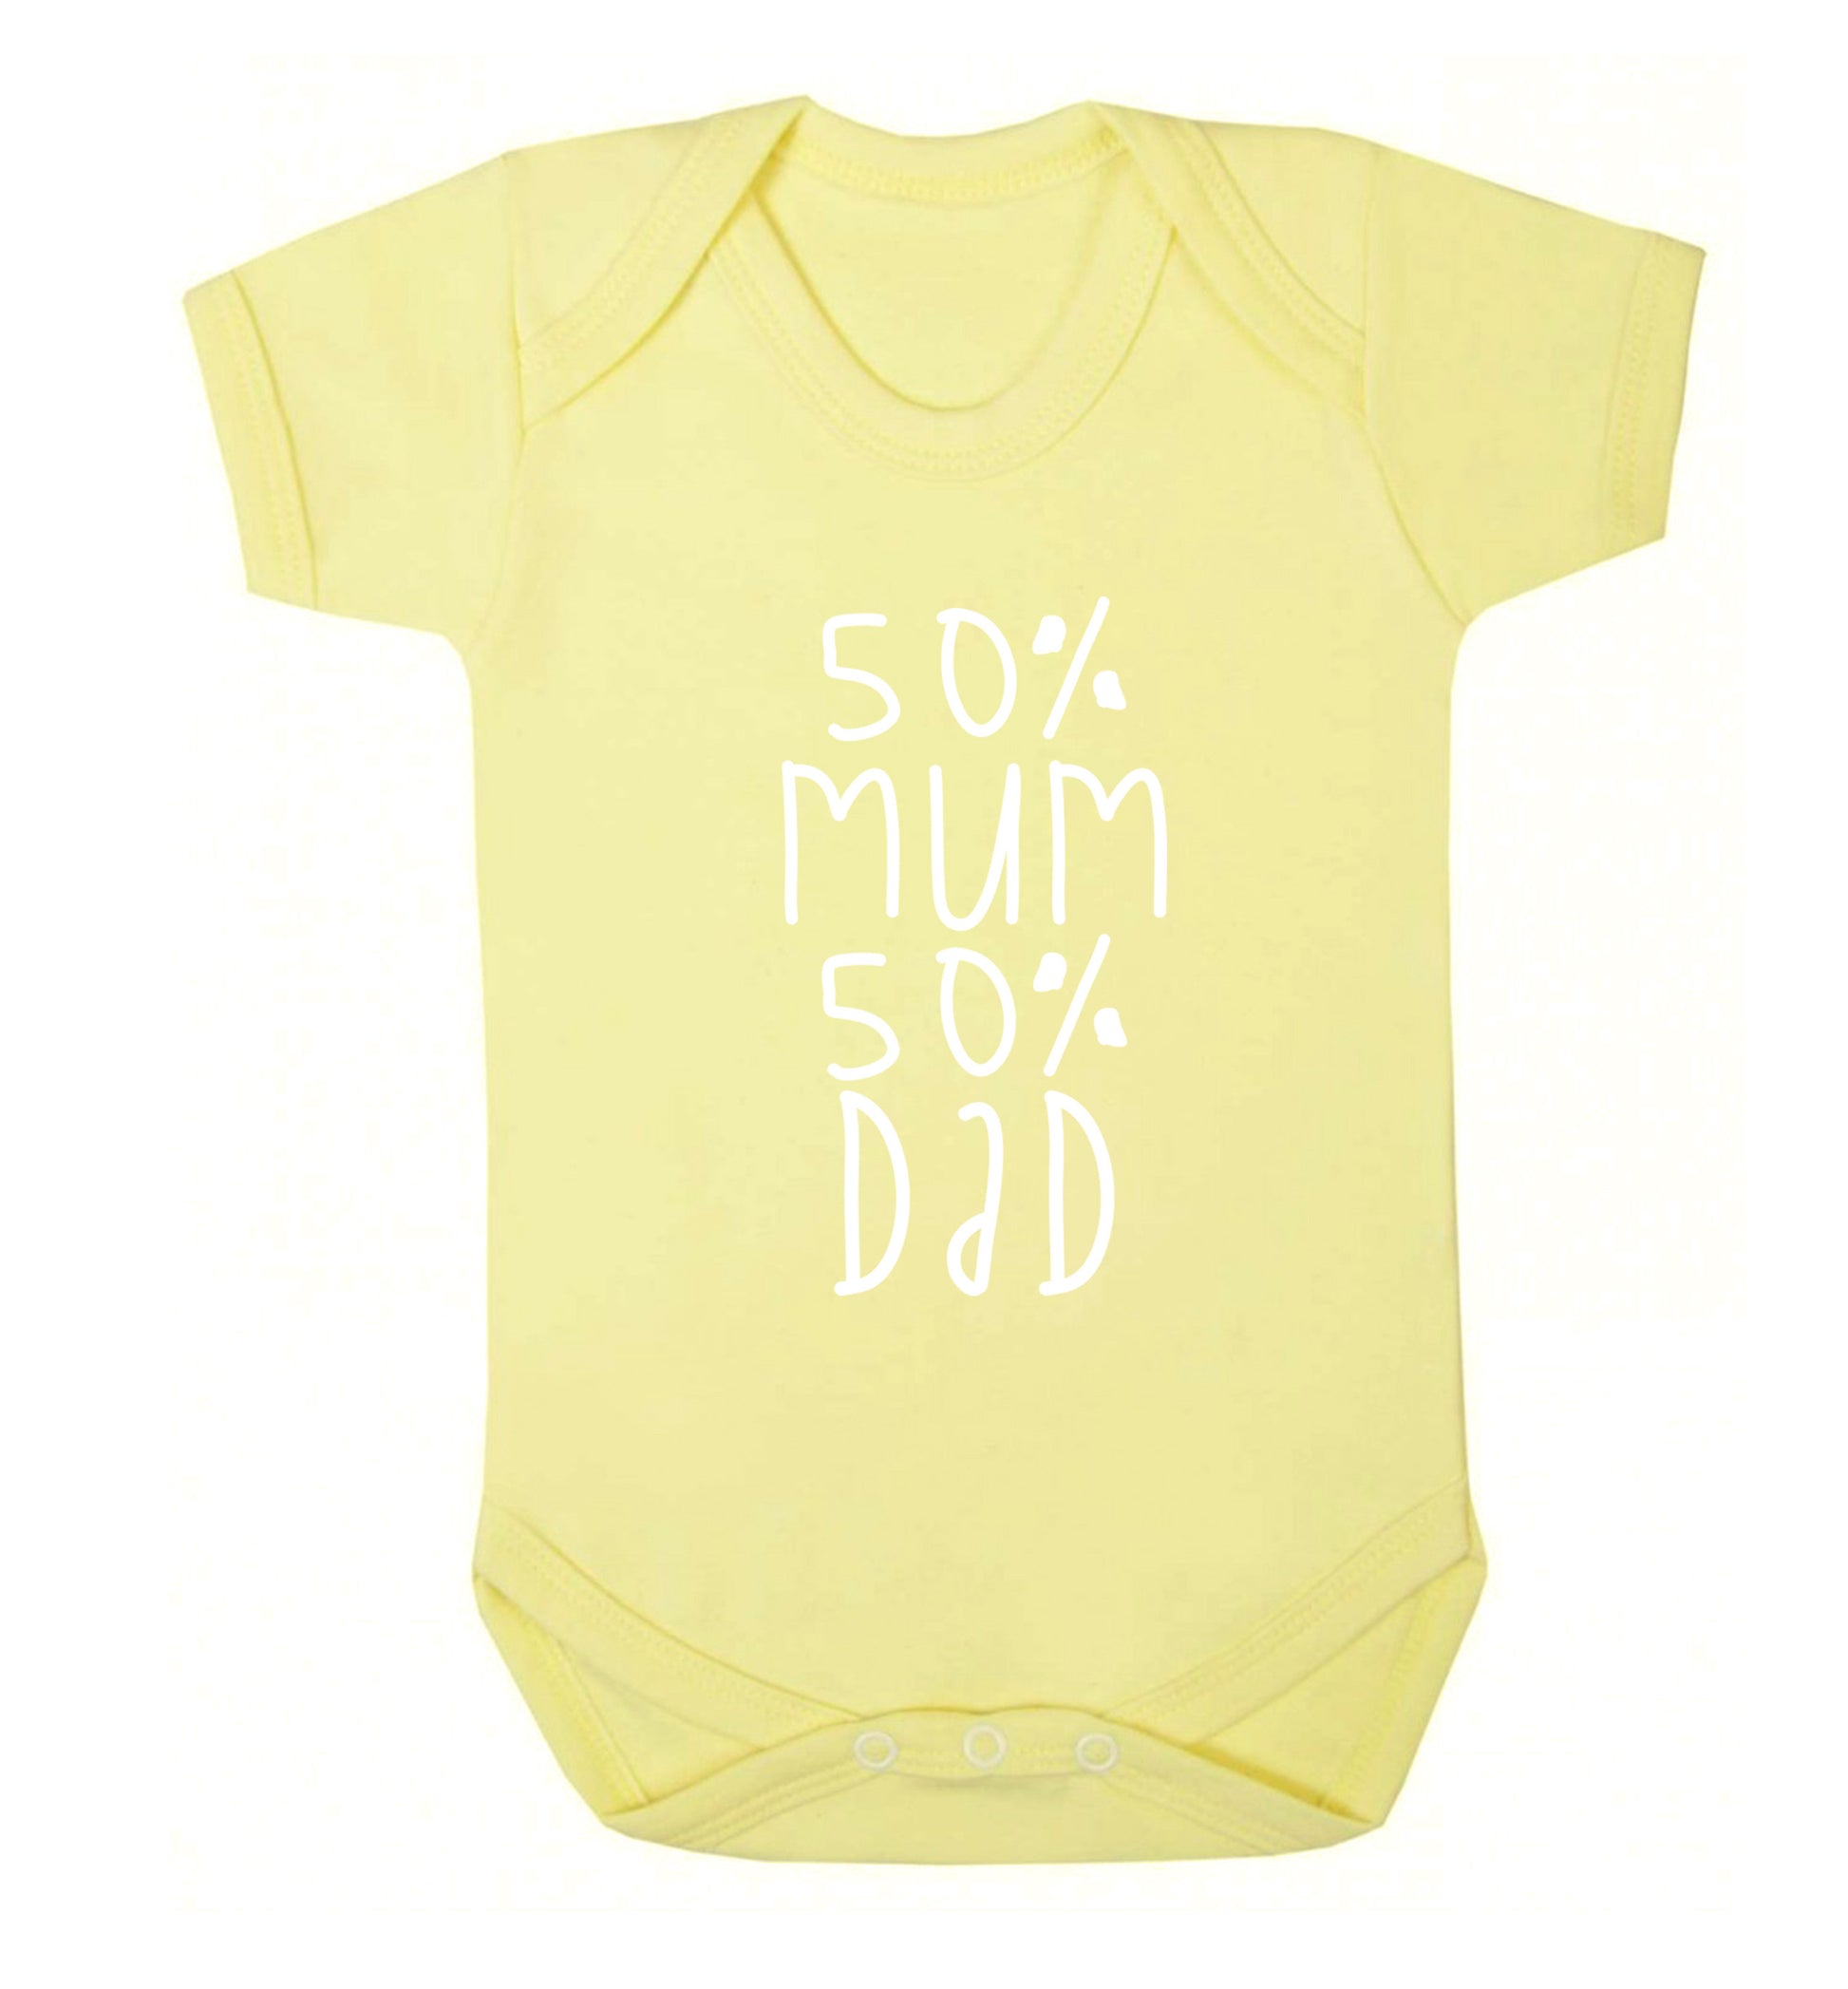 50% mum 50% dad Baby Vest pale yellow 18-24 months